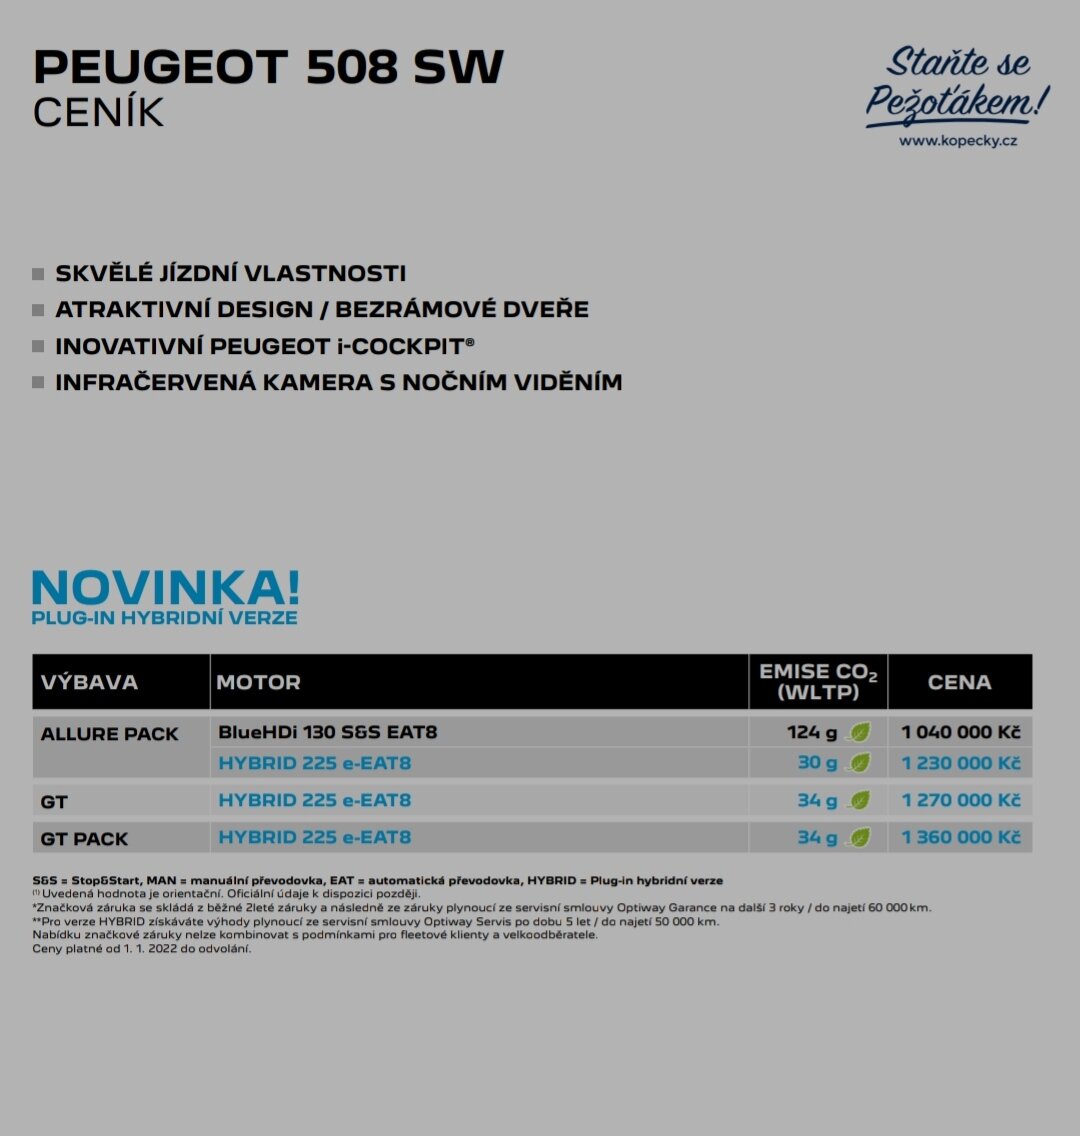 Peugeot 508 sw